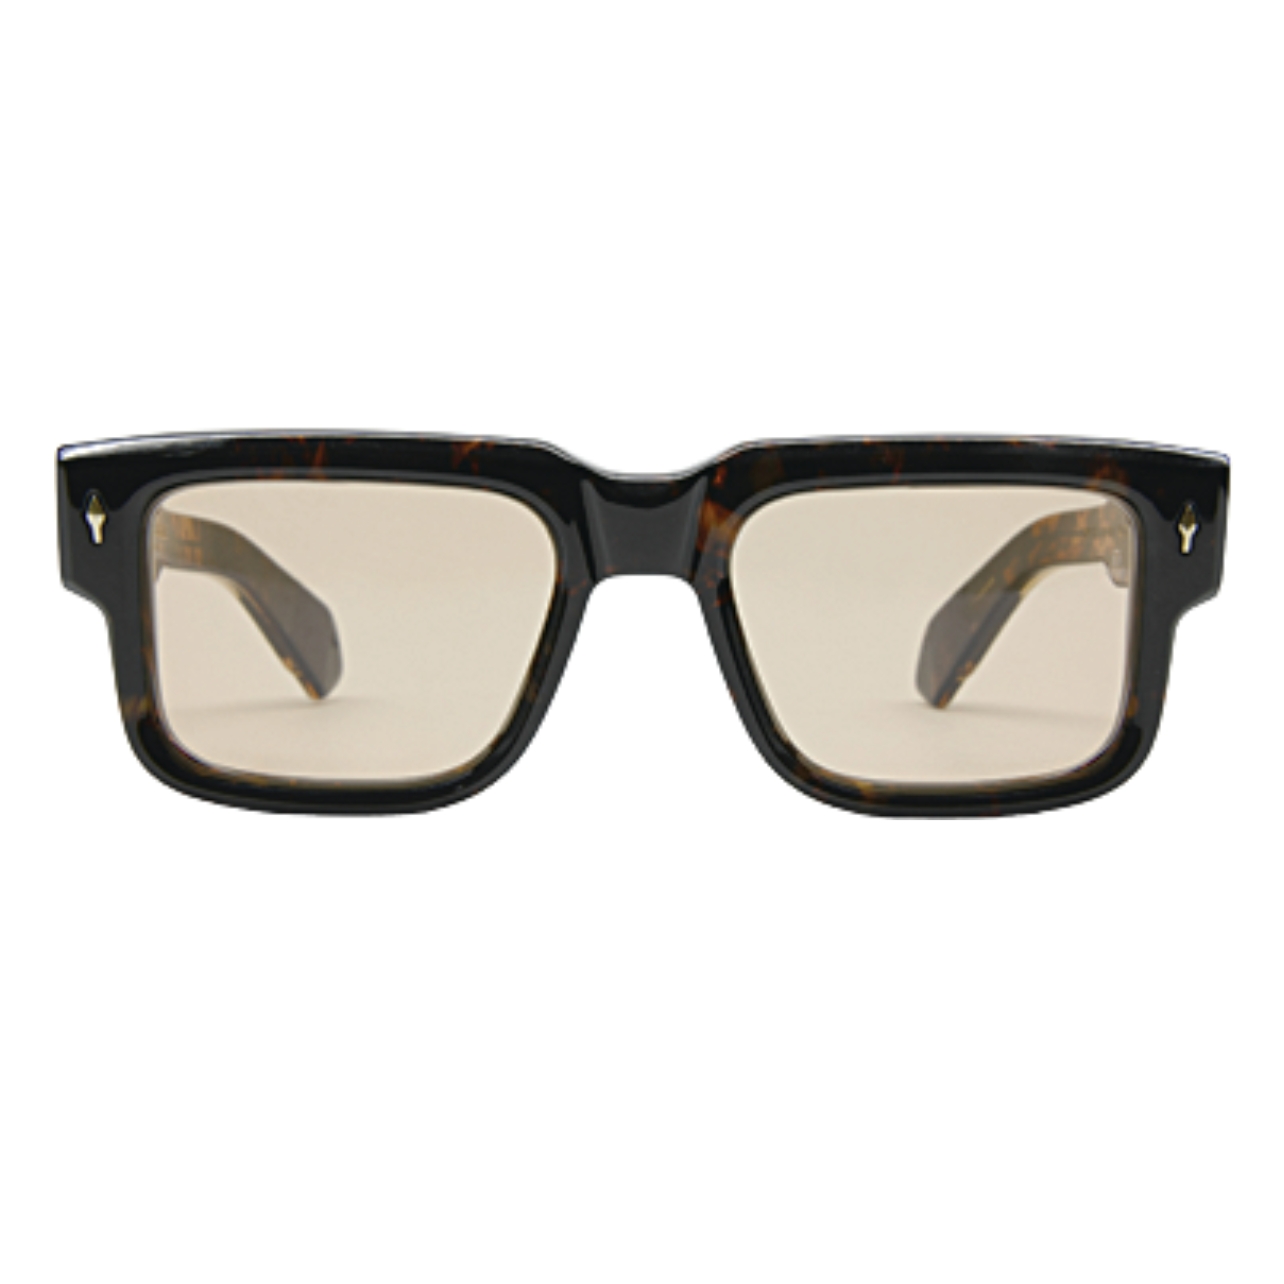 Rectangle frame Morgenthal Frederics Brando Horn sunglasses in black